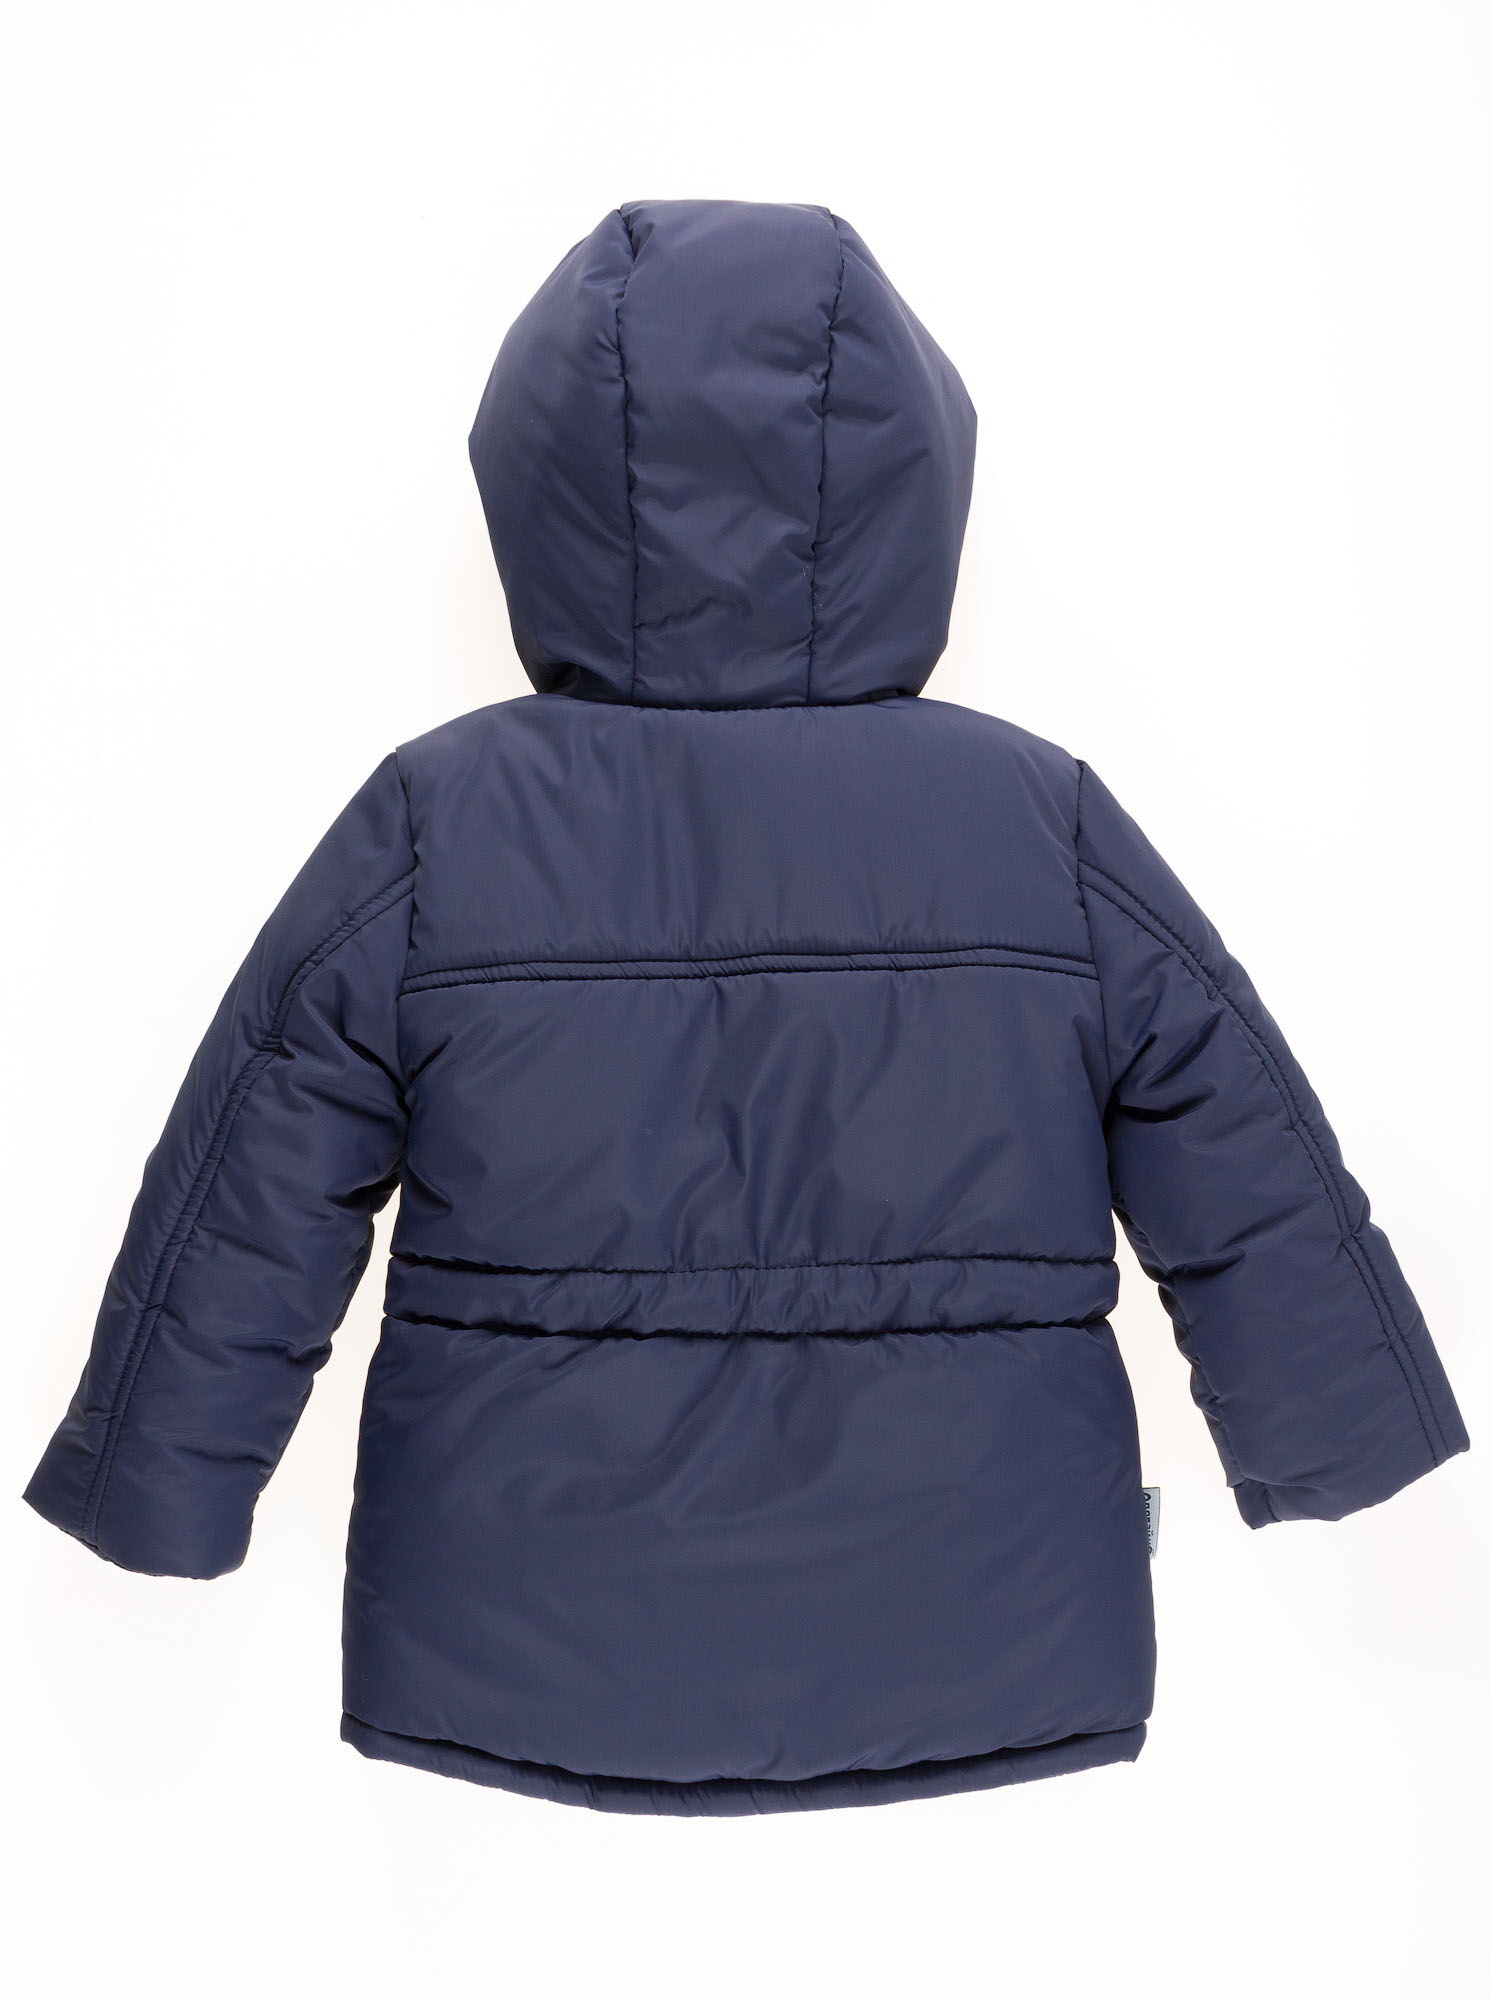 Куртка зимняя для мальчика Одягайко темно-синяя  20012О - фото